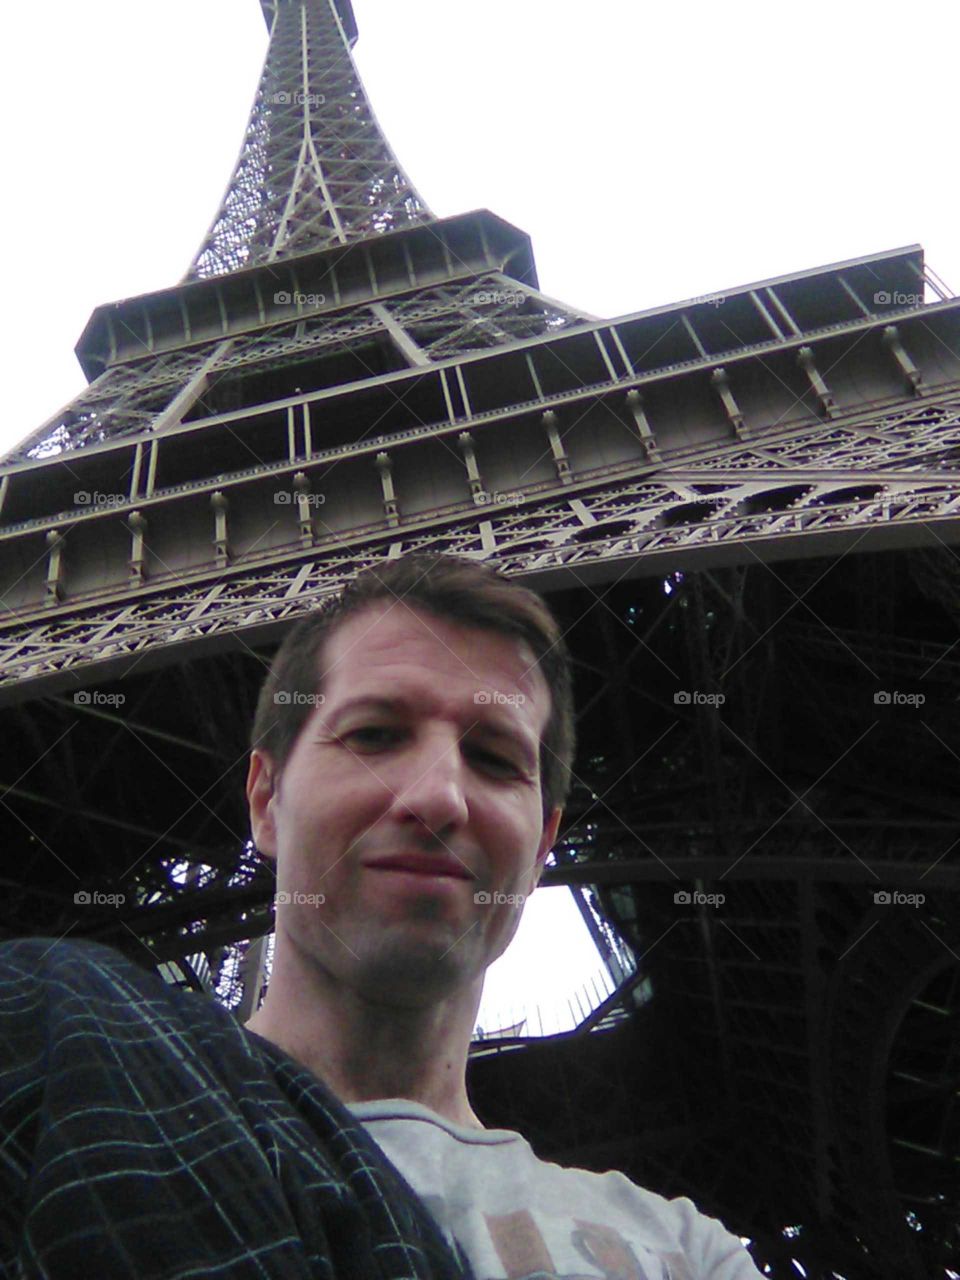 Torre Eiffel desde otra perspectiva